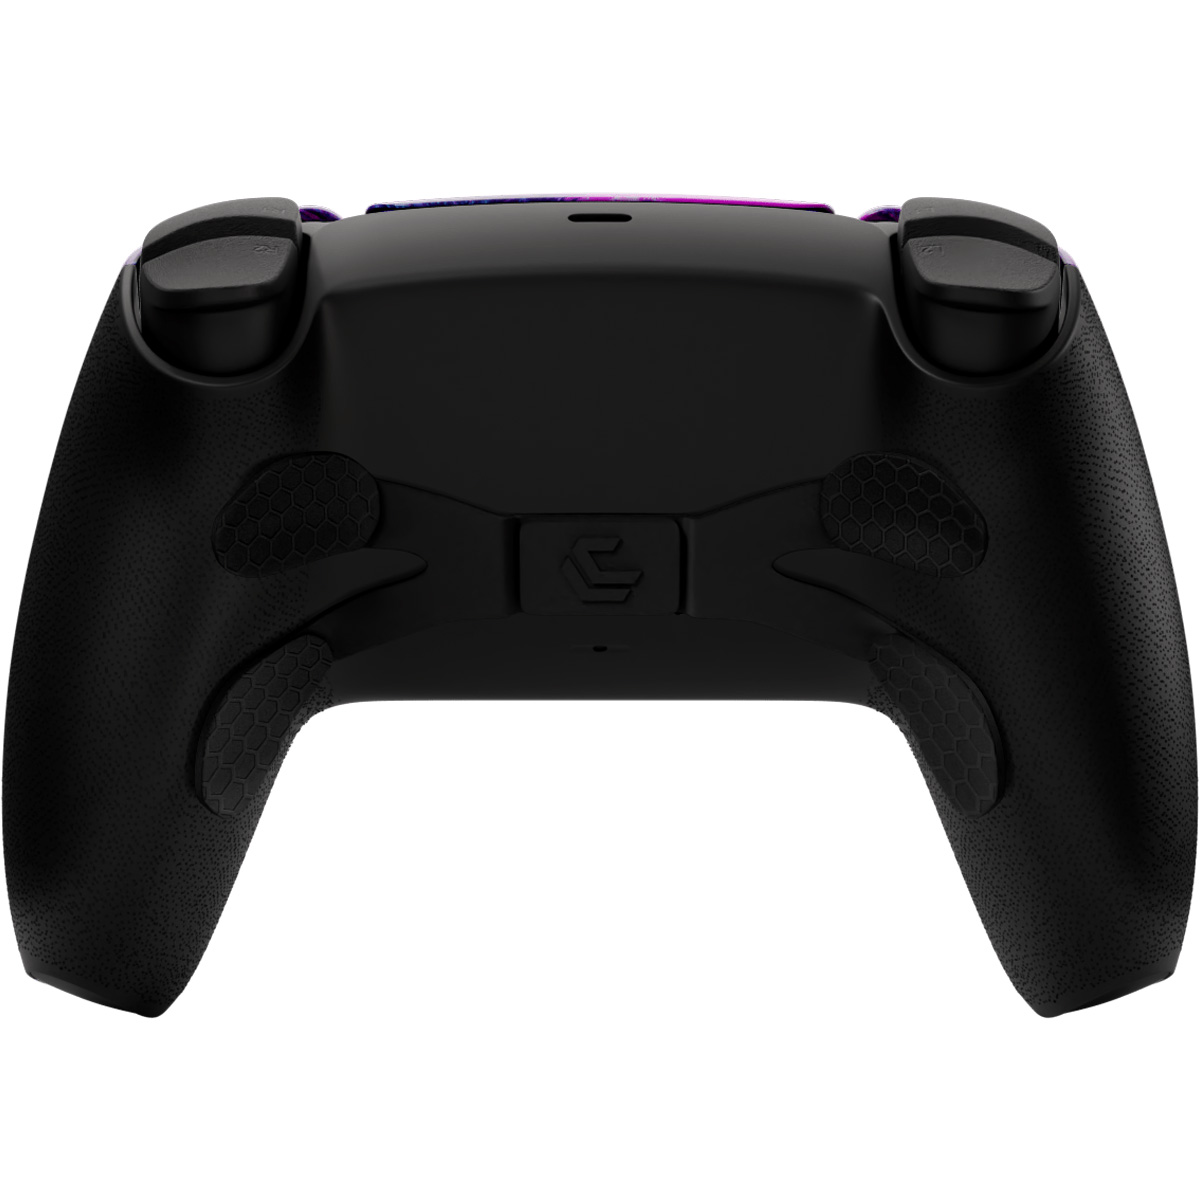 Konsole PS5 für 4 LUXCONTROLLER programmierbaren Custom Paddles Wireless-Controller Wave lila Design Controller Playstation5